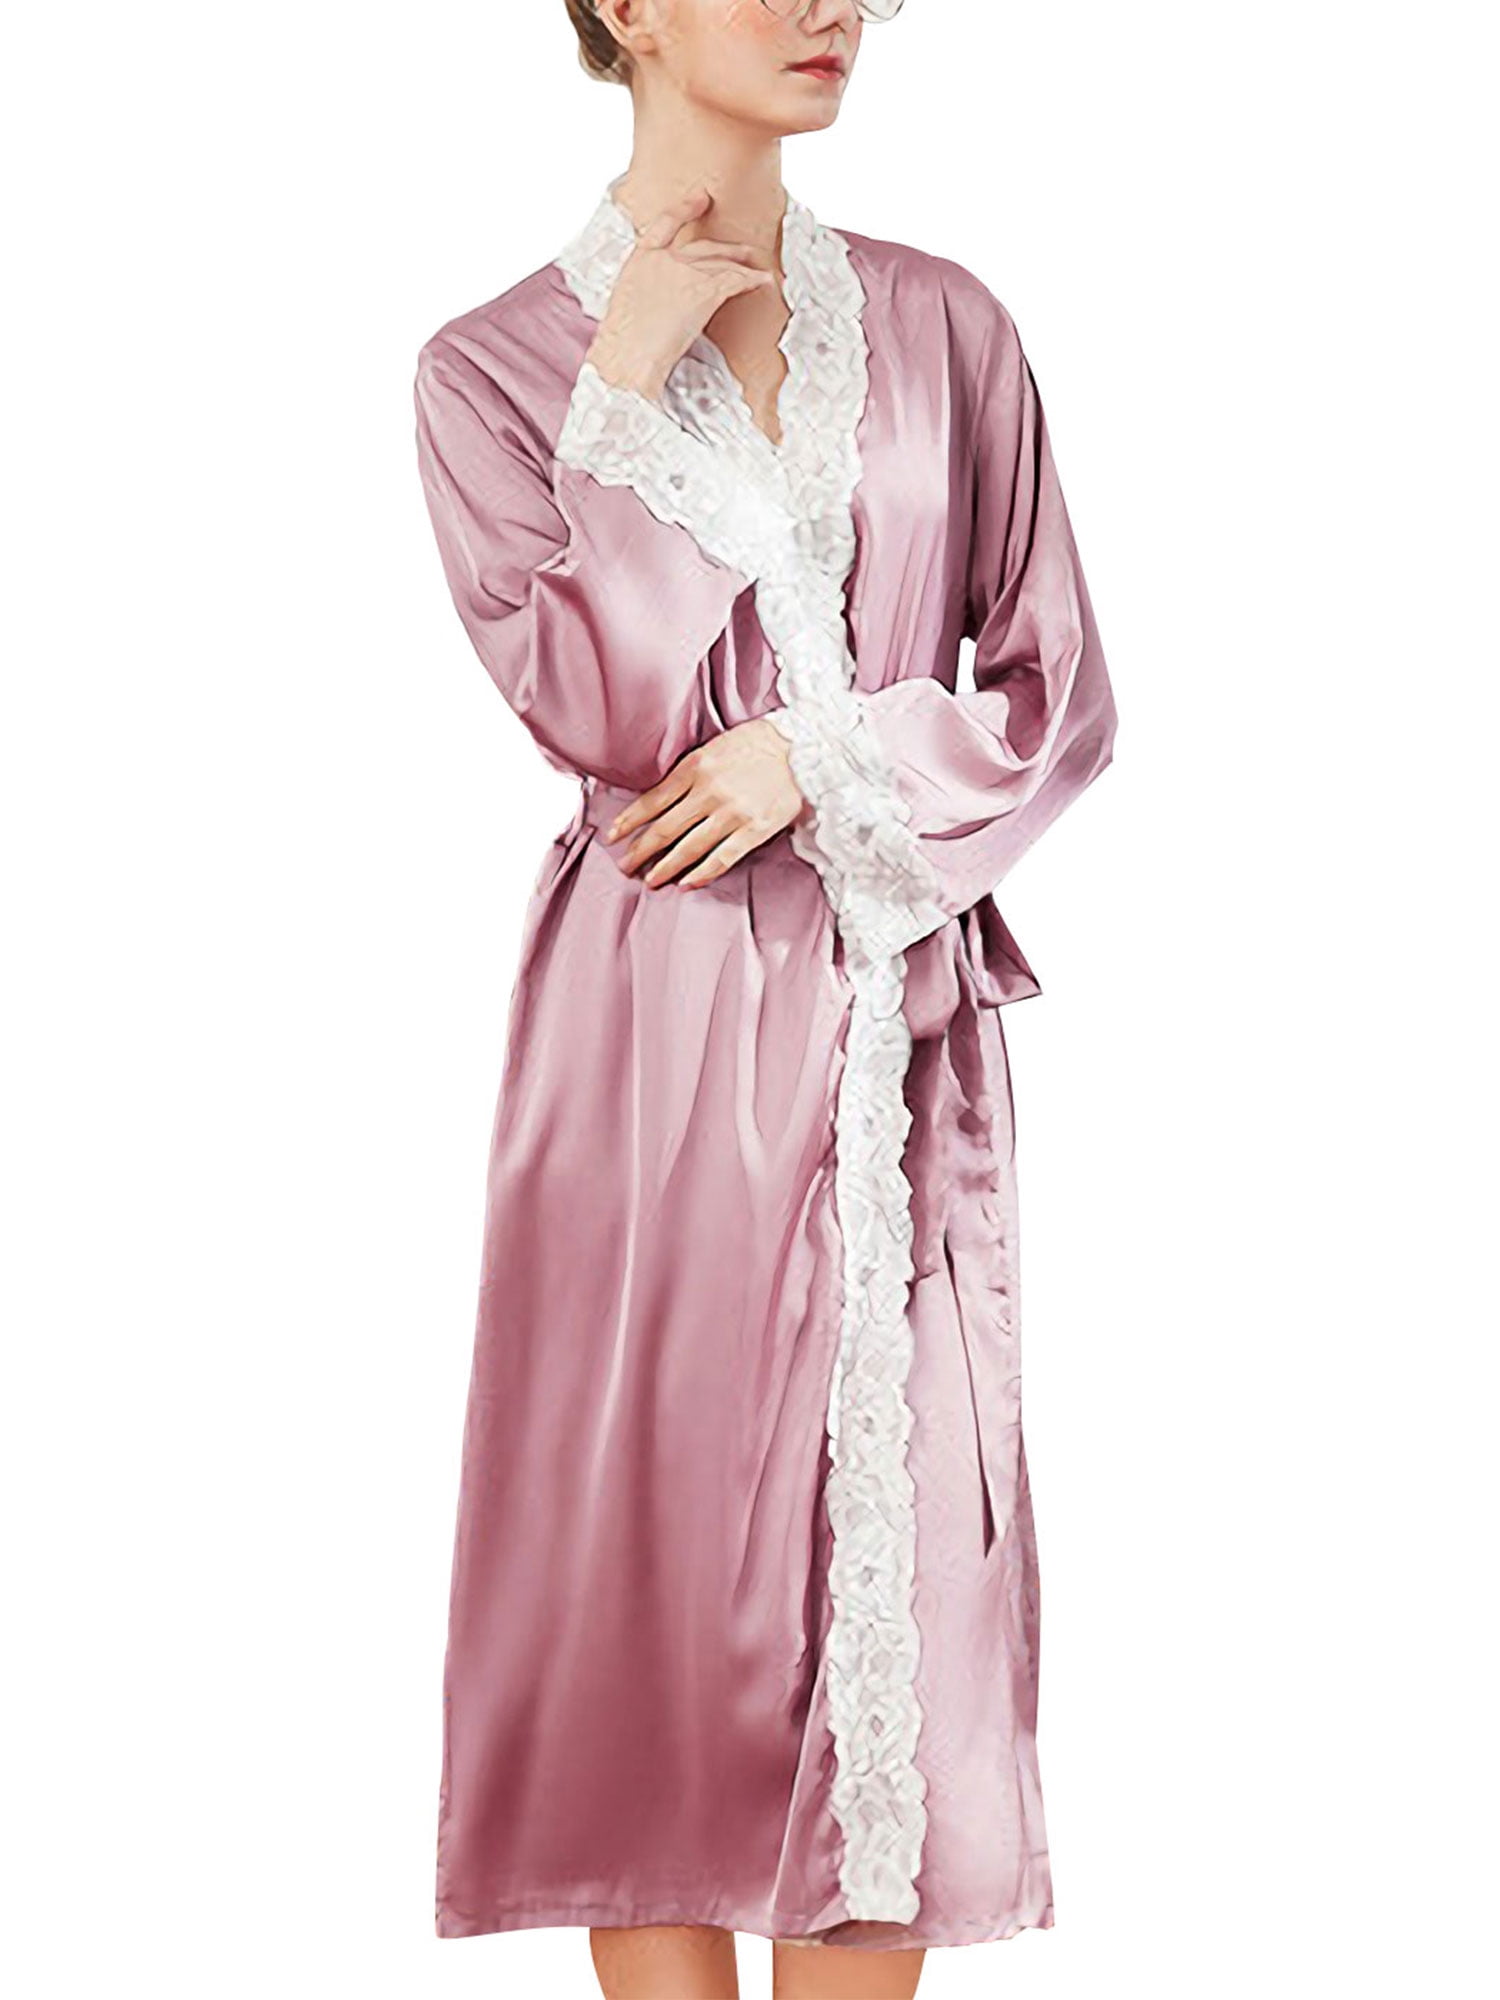 Long Cotton Kimono Robes,Beach Wear Dress Bathrobe  Wedding Bridal Robe Bridesmaids Sleepwear Changing Gown